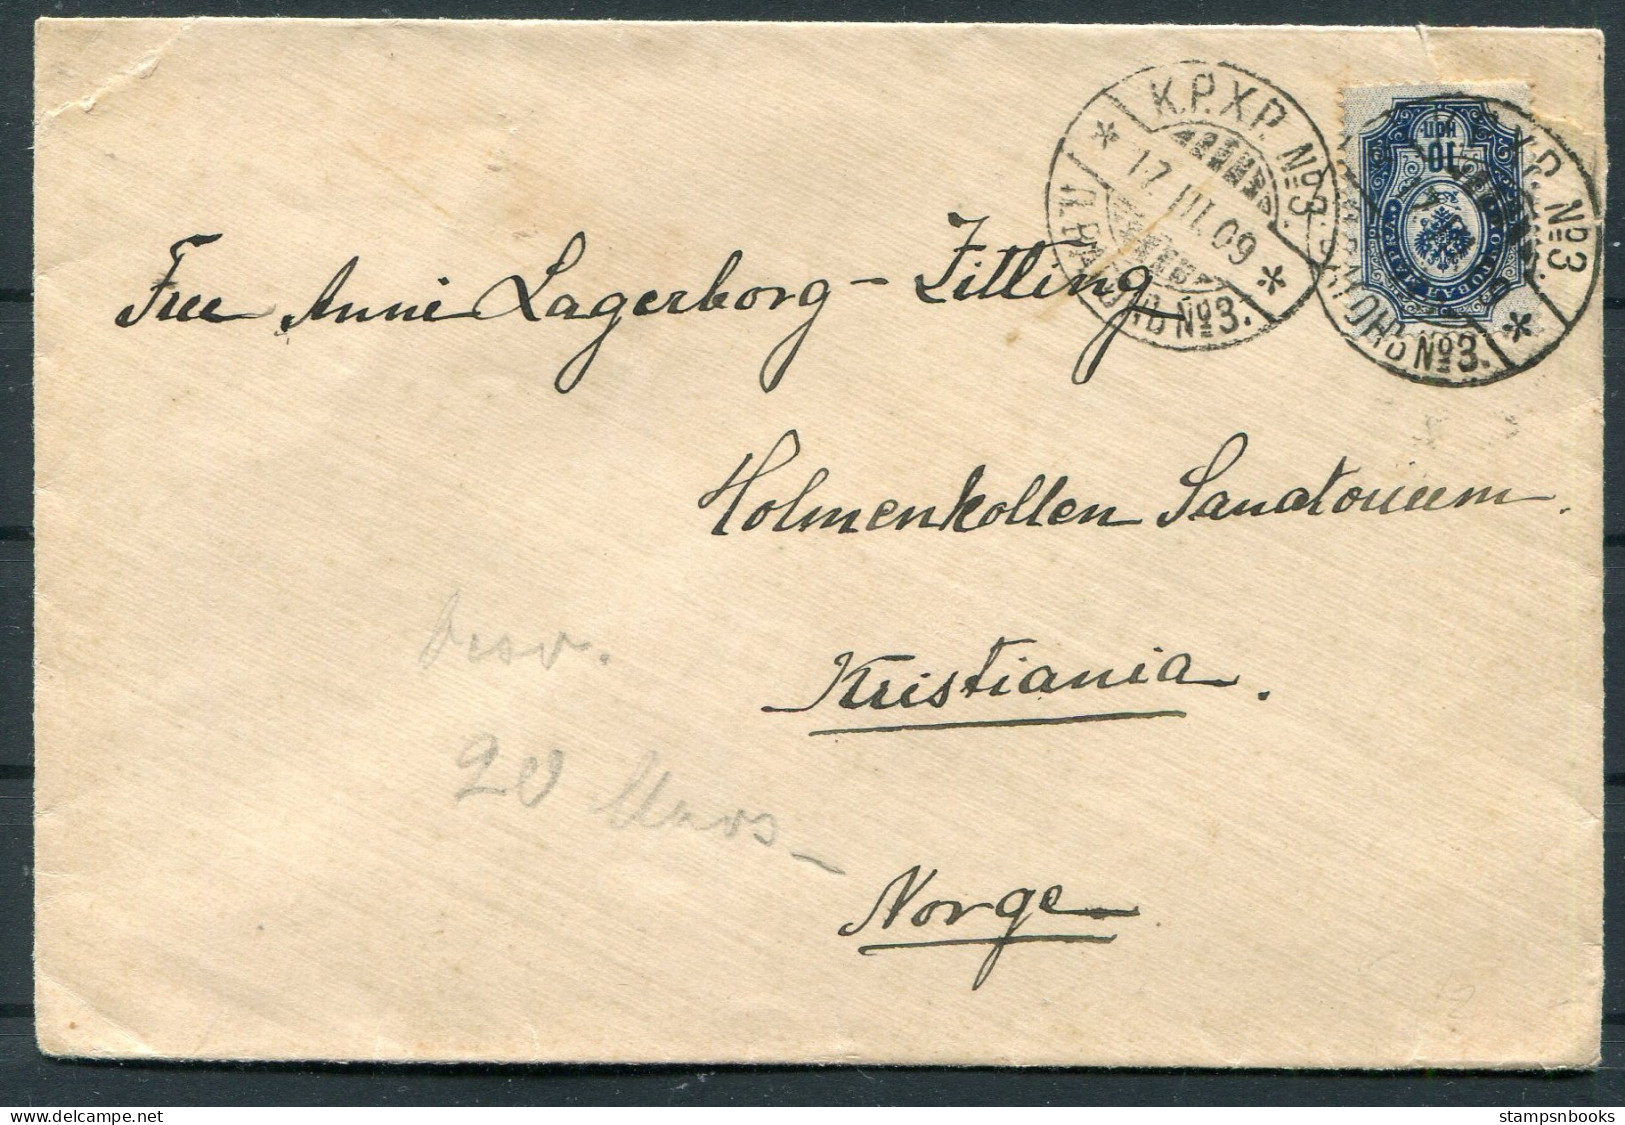 1919 Finland K.P.X.P. No 3 Railway TPO Cover - Holmenkollen Tuberculosis Sanatorium, Kristiania Norway Hotel - Covers & Documents